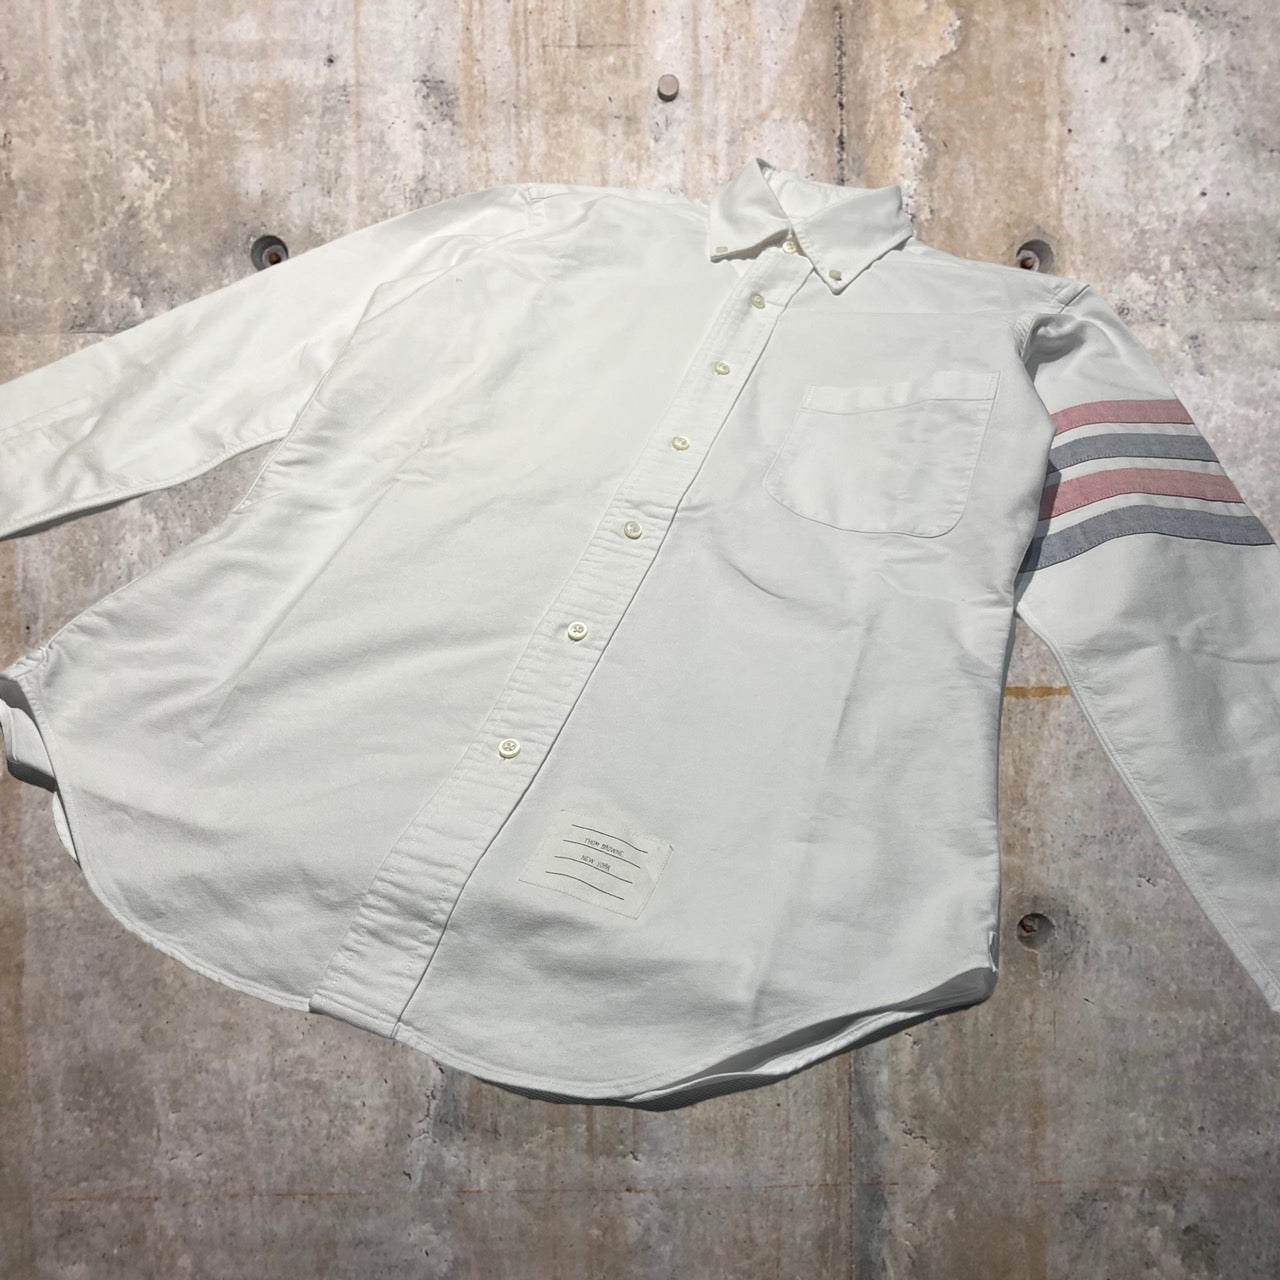 THOM BROWNE(トムブラウン) 4 stripe BD shirt/4ストライプボタンダウンシャツ MWL119AW5259 1(Sサイズ程度) ホワイト